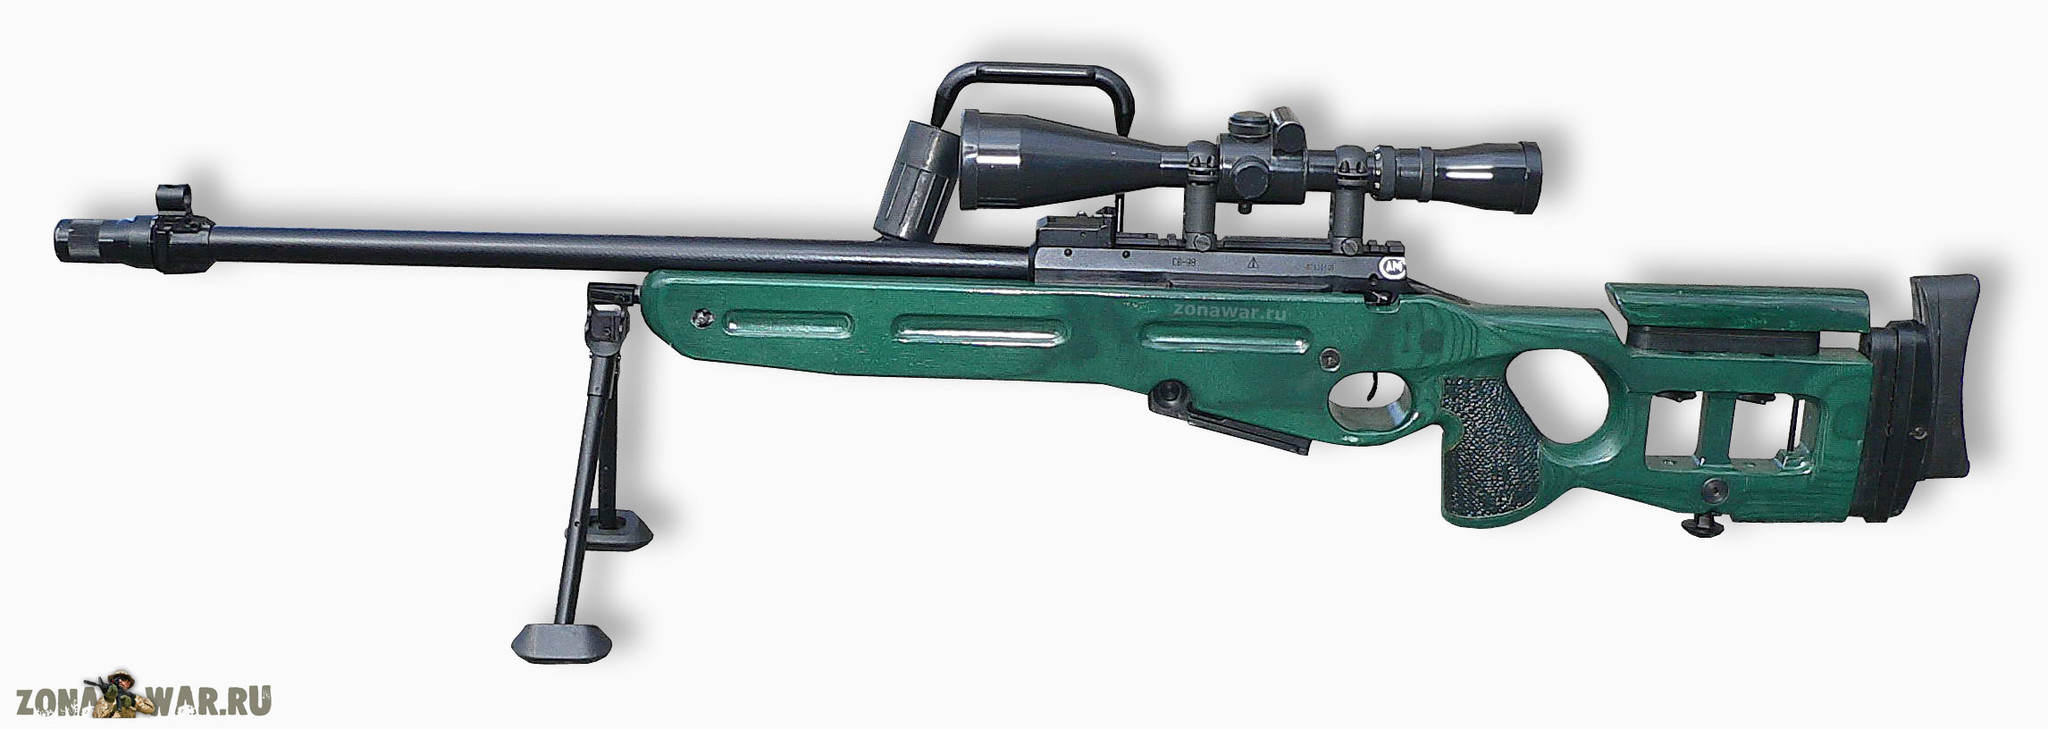 SV-98 sniper rifle